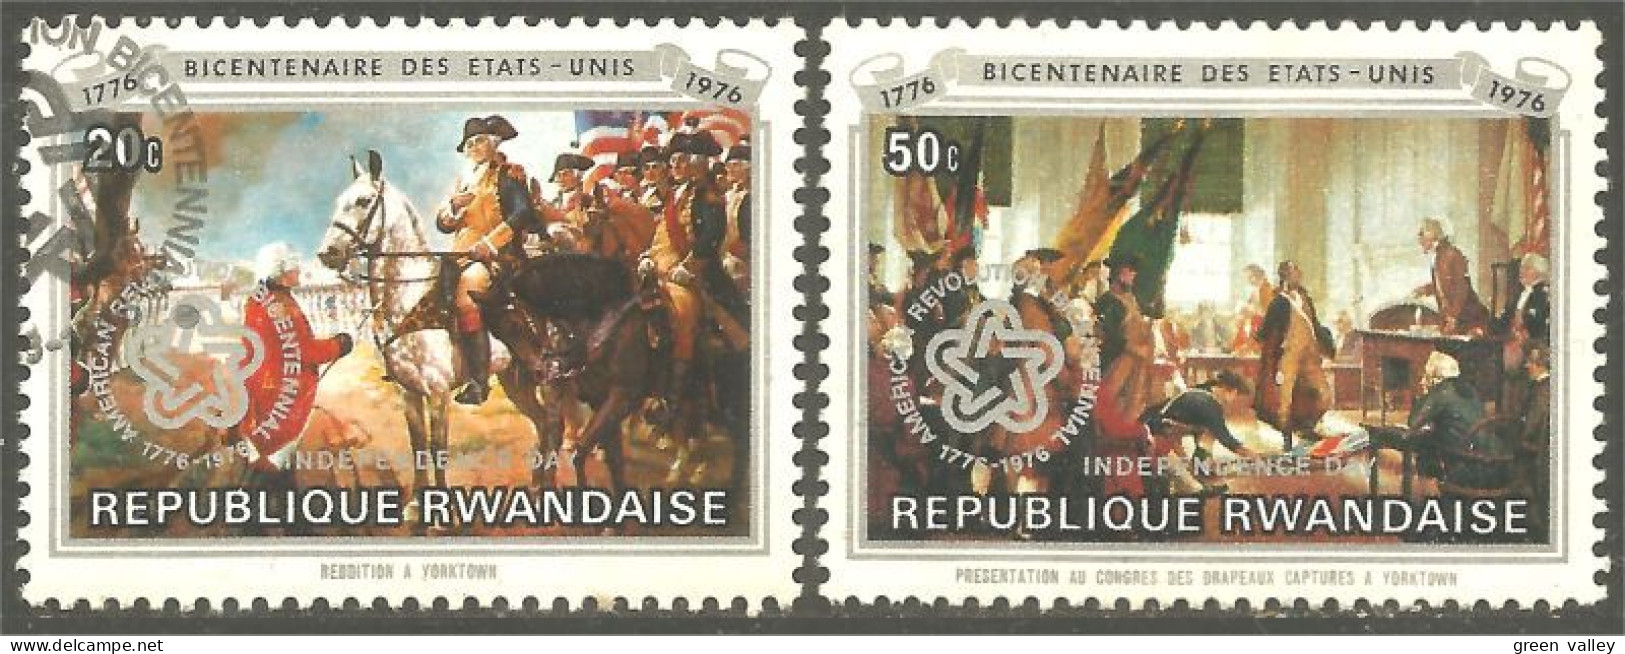 777 Rwanda Bicentenaire USA Bicentenary 1776 MNH ** Neuf SC (RWA-269) - Unabhängigkeit USA